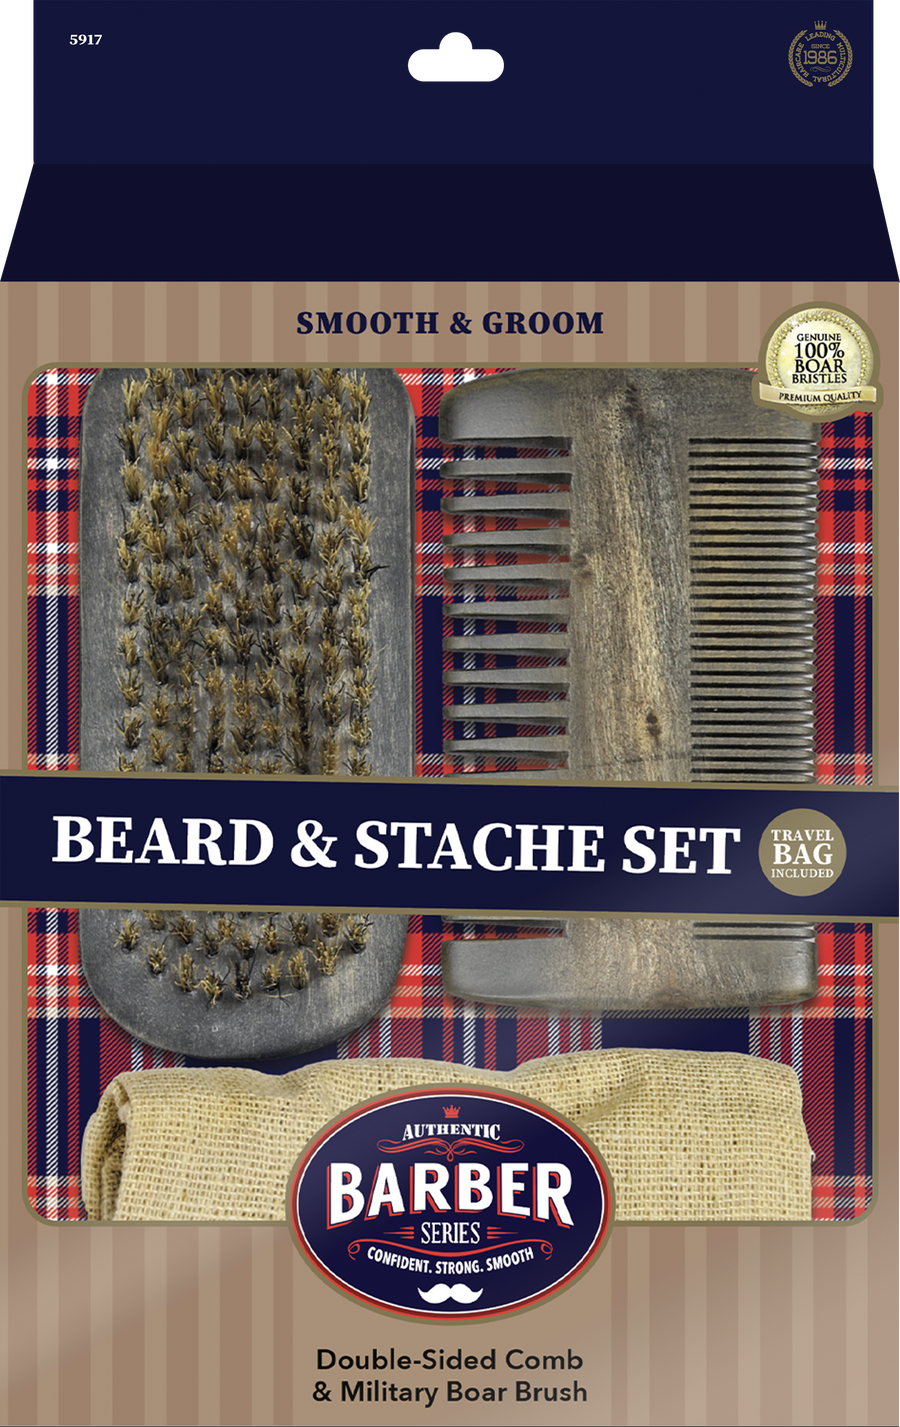 WavEnforcer Barber Series Beard & Stache Set 5917